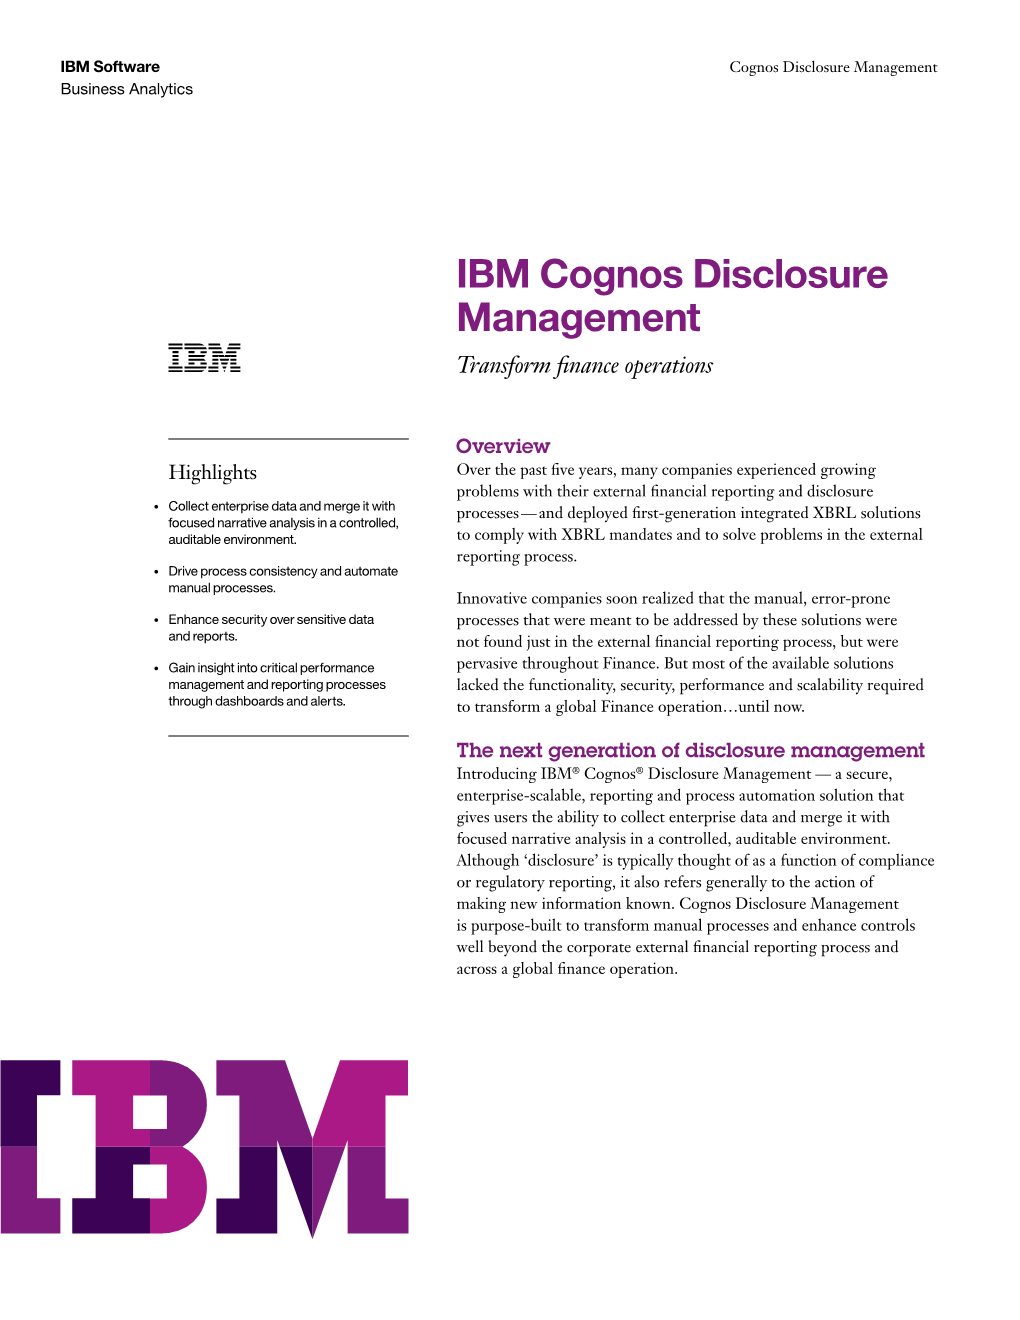 IBM Cognos Disclosure Management Transform Finance Operations